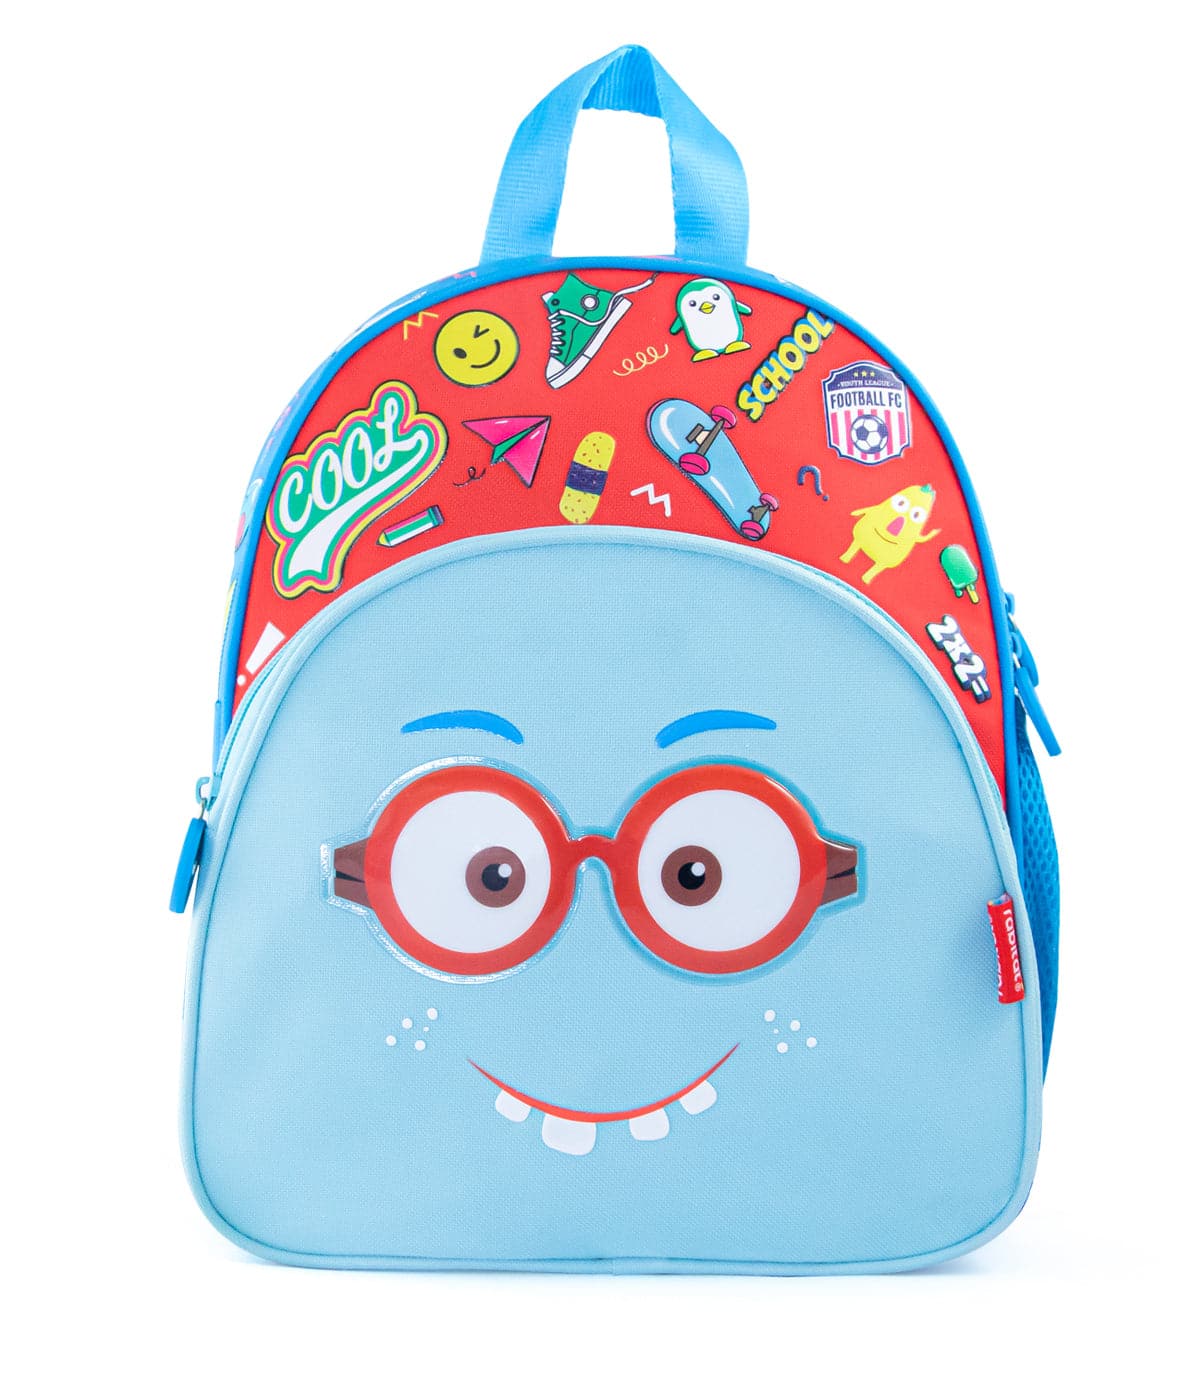 Bagful combo (Smash Kids School bag Pack of 2)